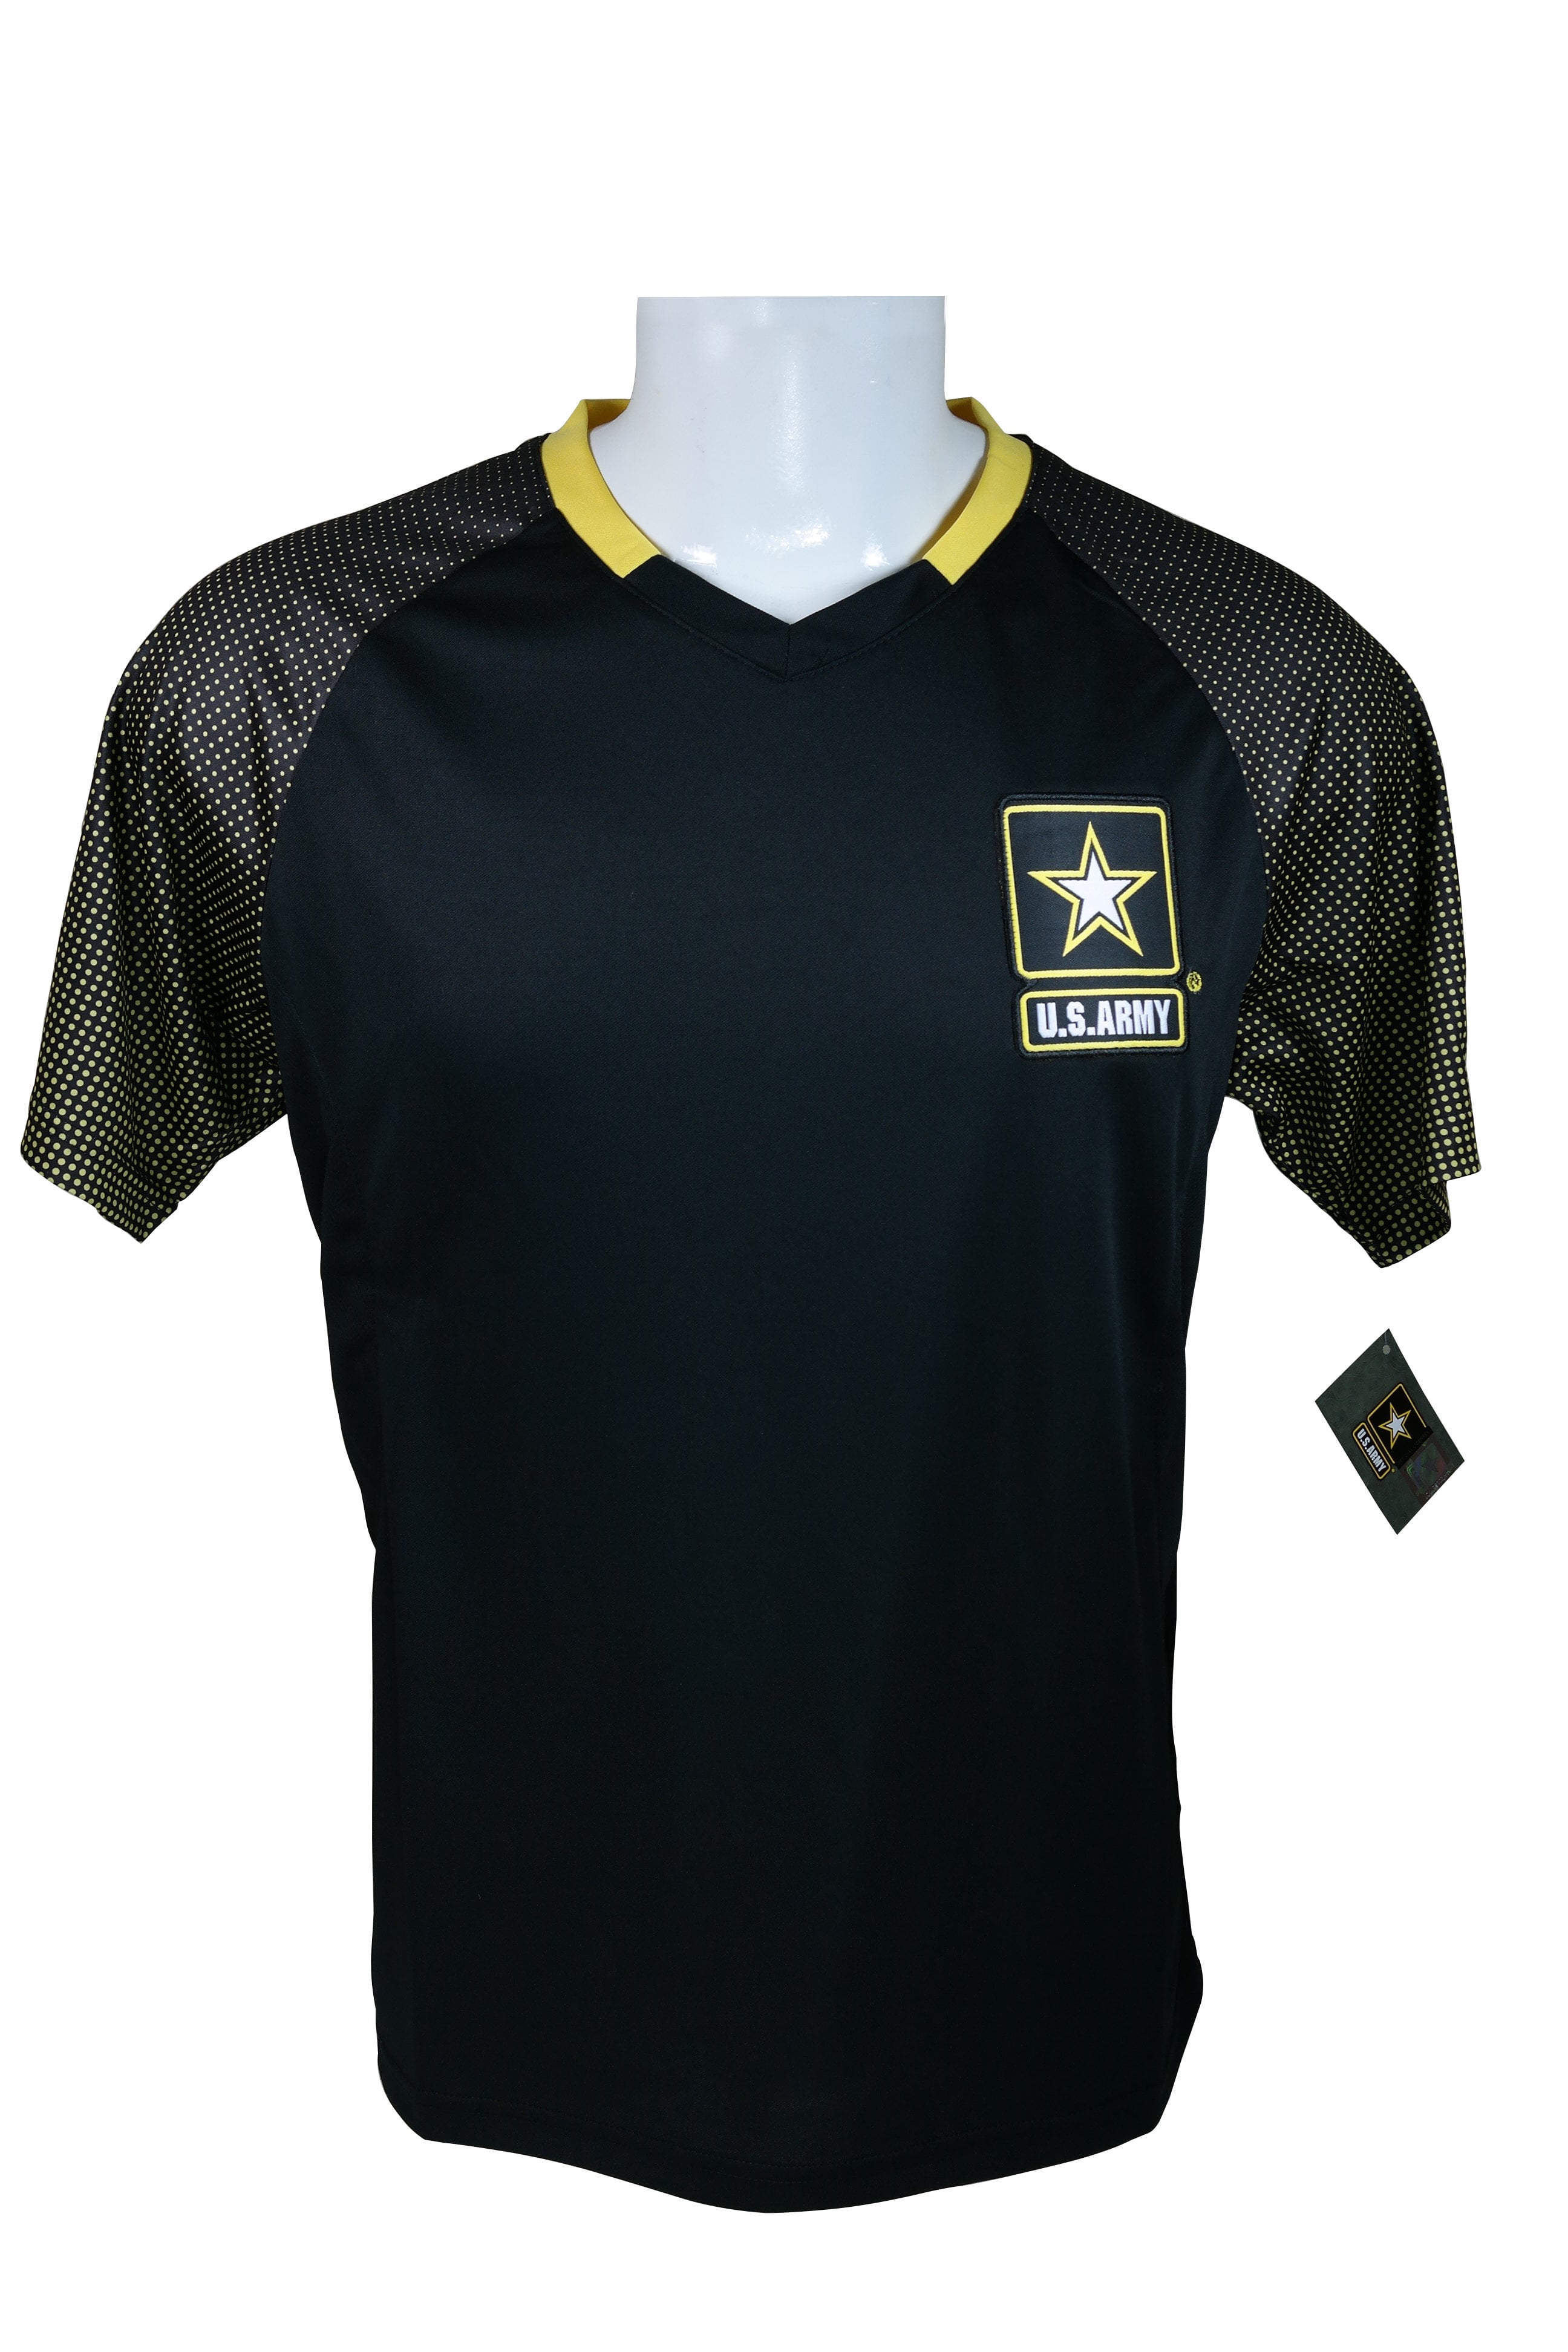 army soccer jersey